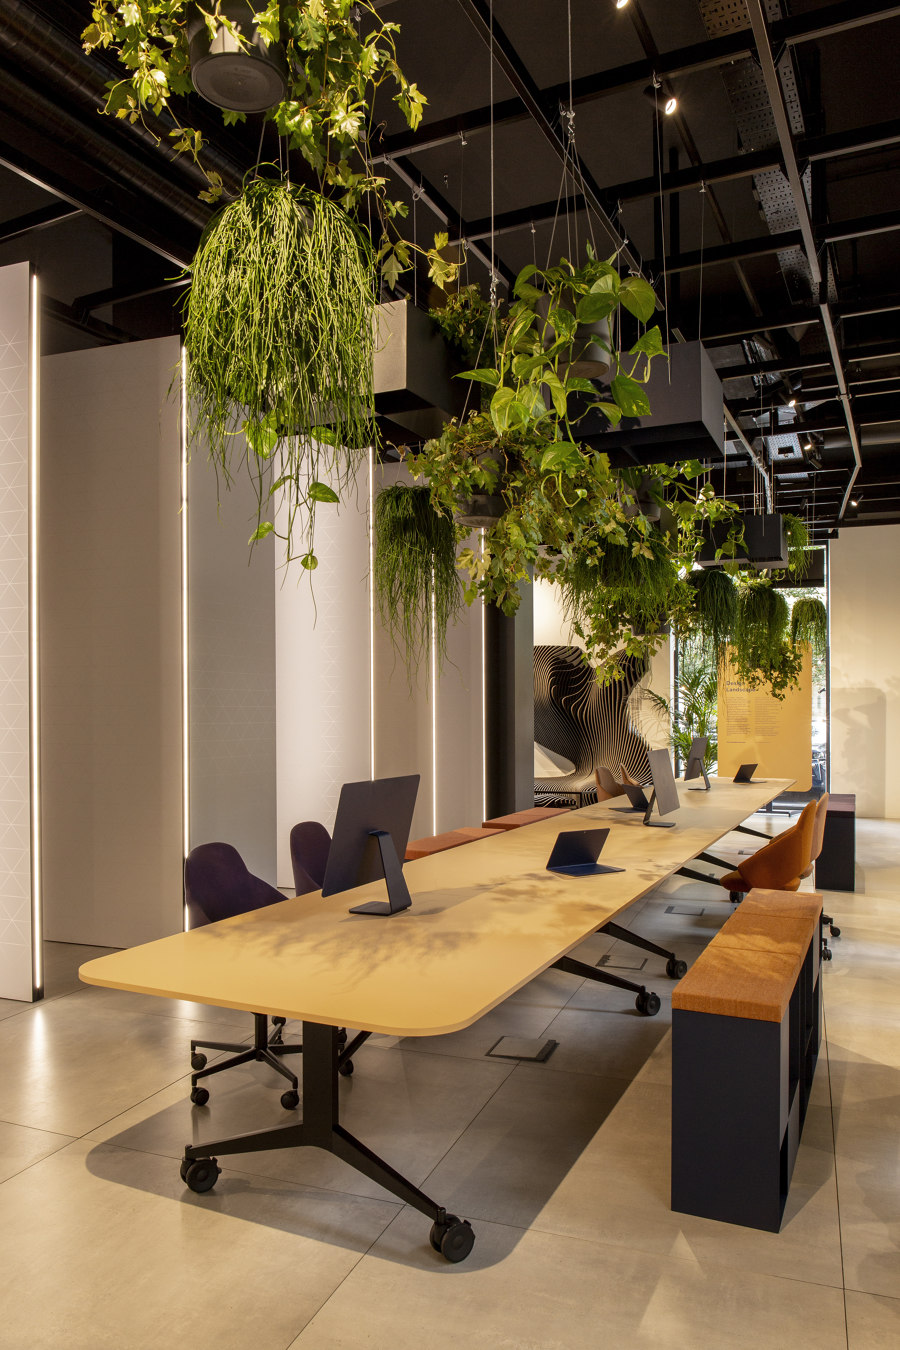 Mara’s Milan manifesto: designing furniture that makes us feel | Novità